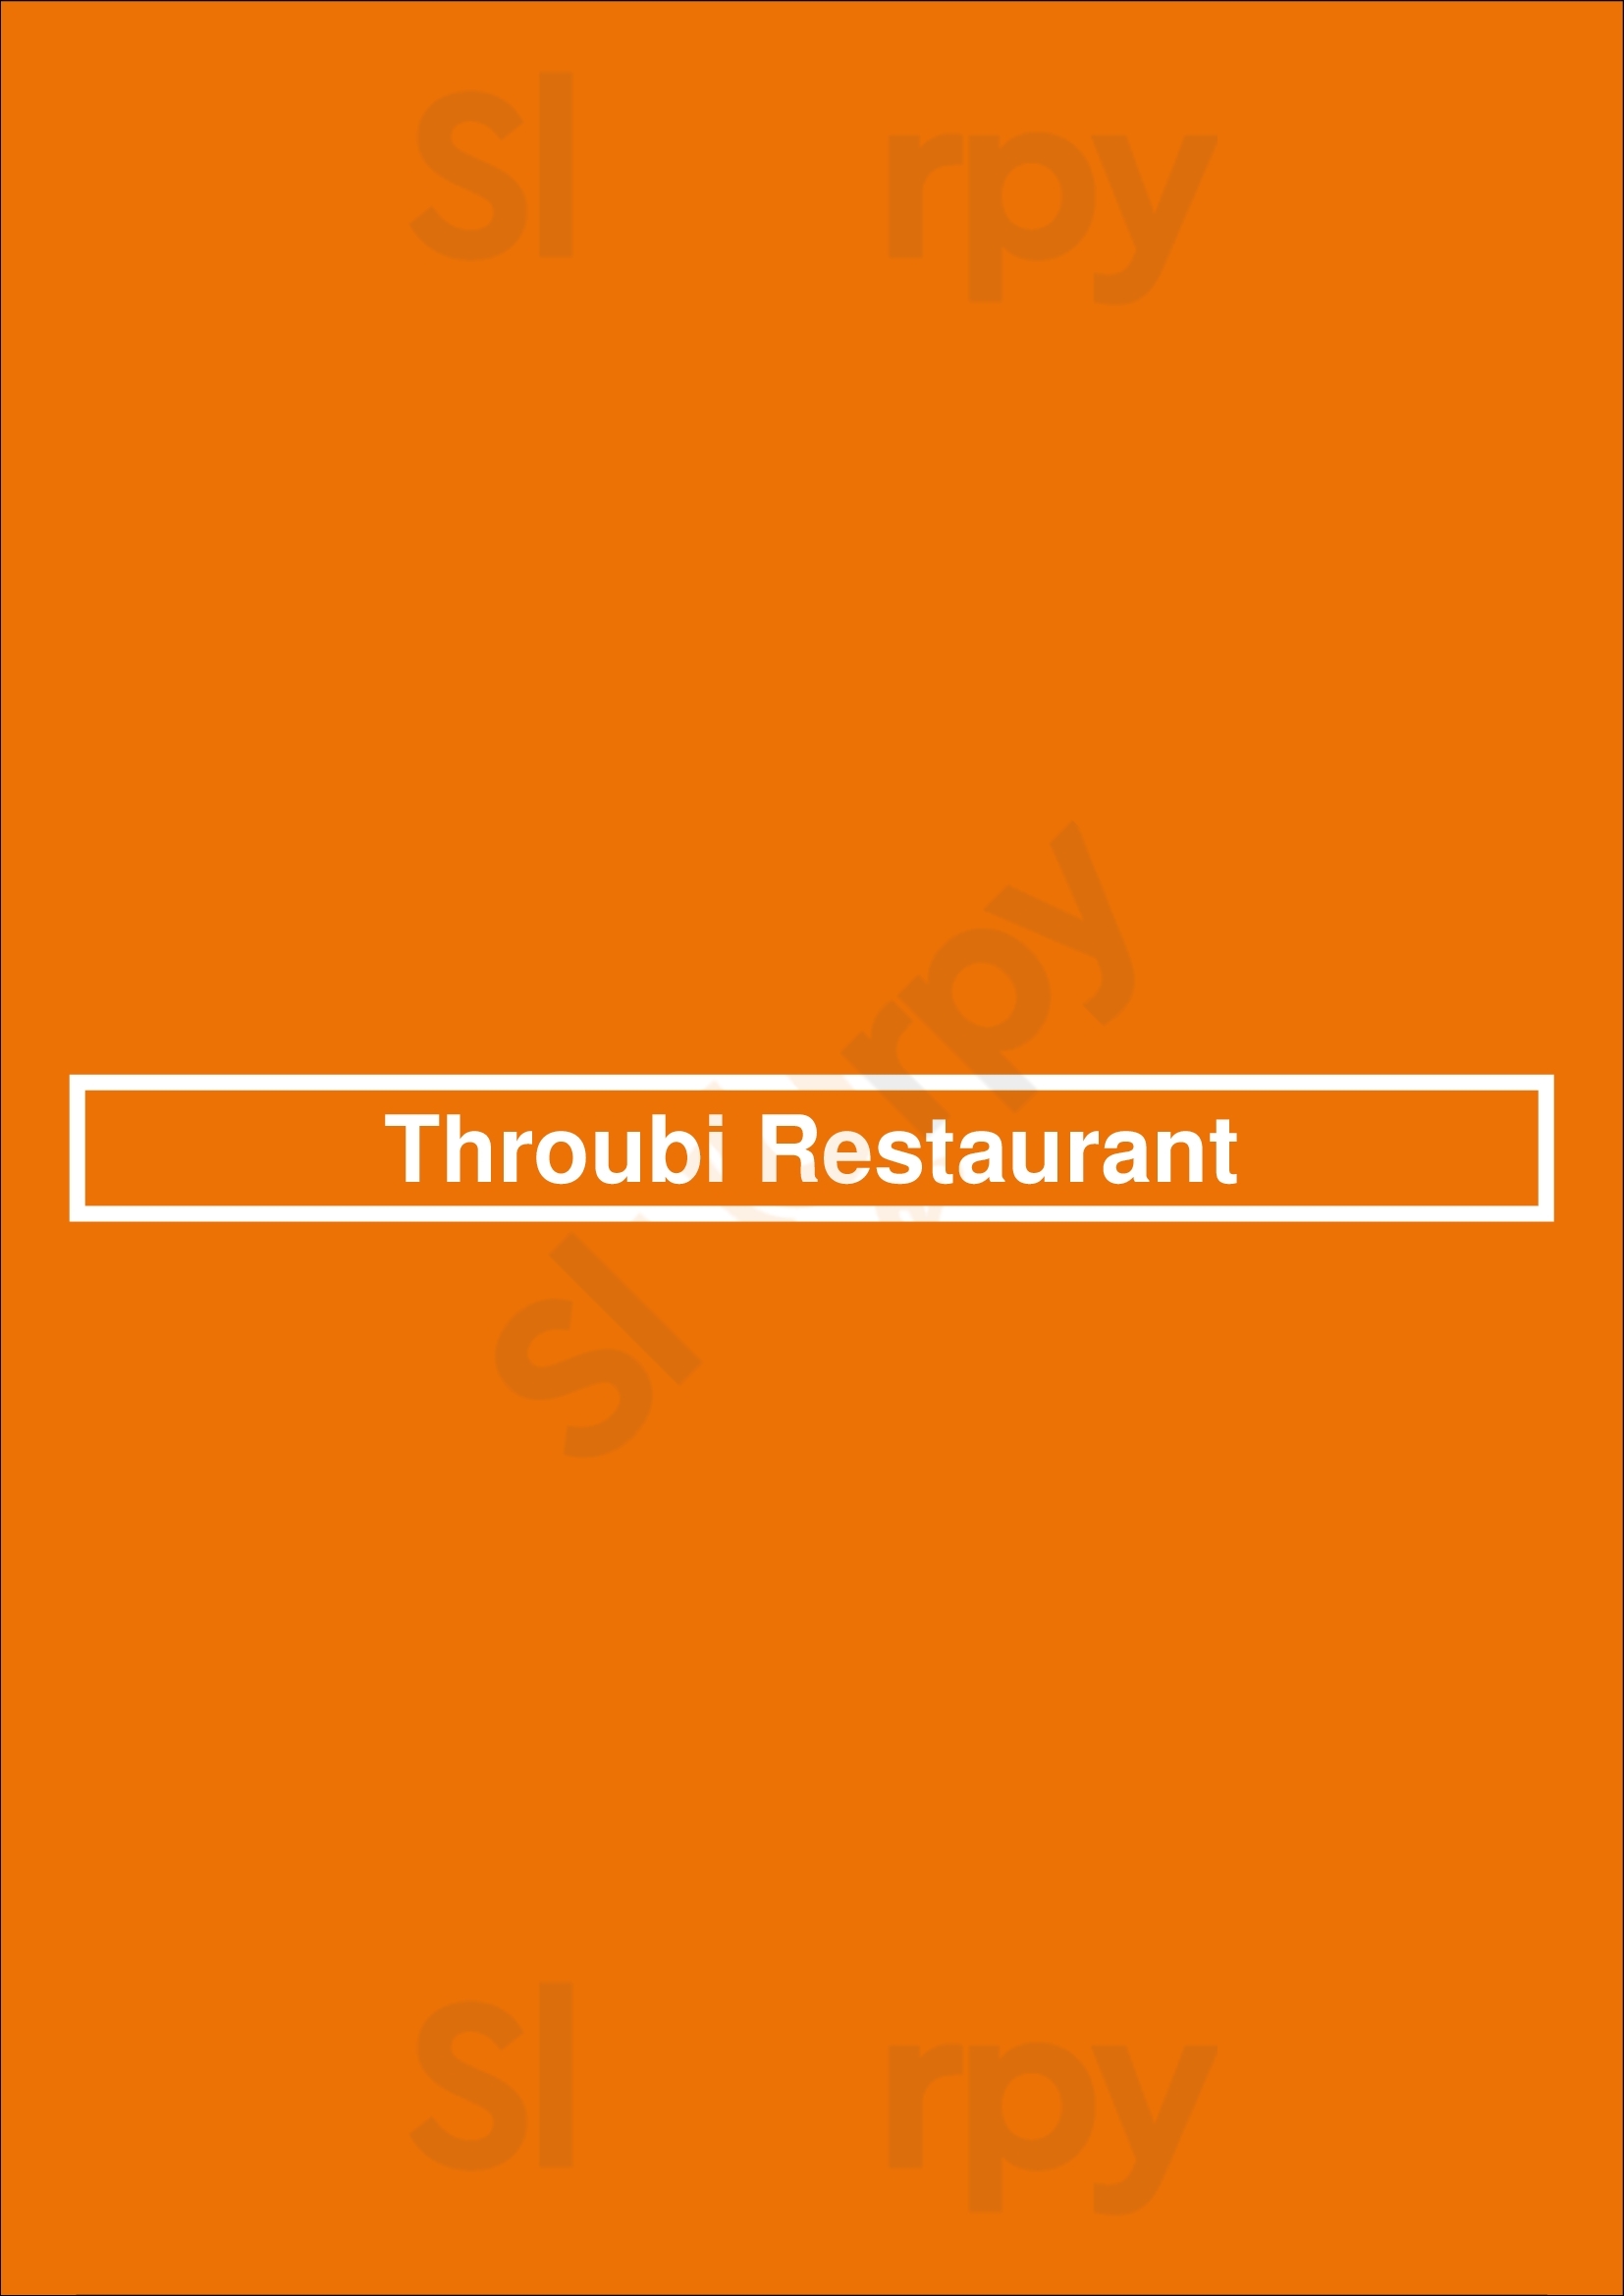 Throubi Restaurant At Andronis Concept Ημεροβίγλι Menu - 1